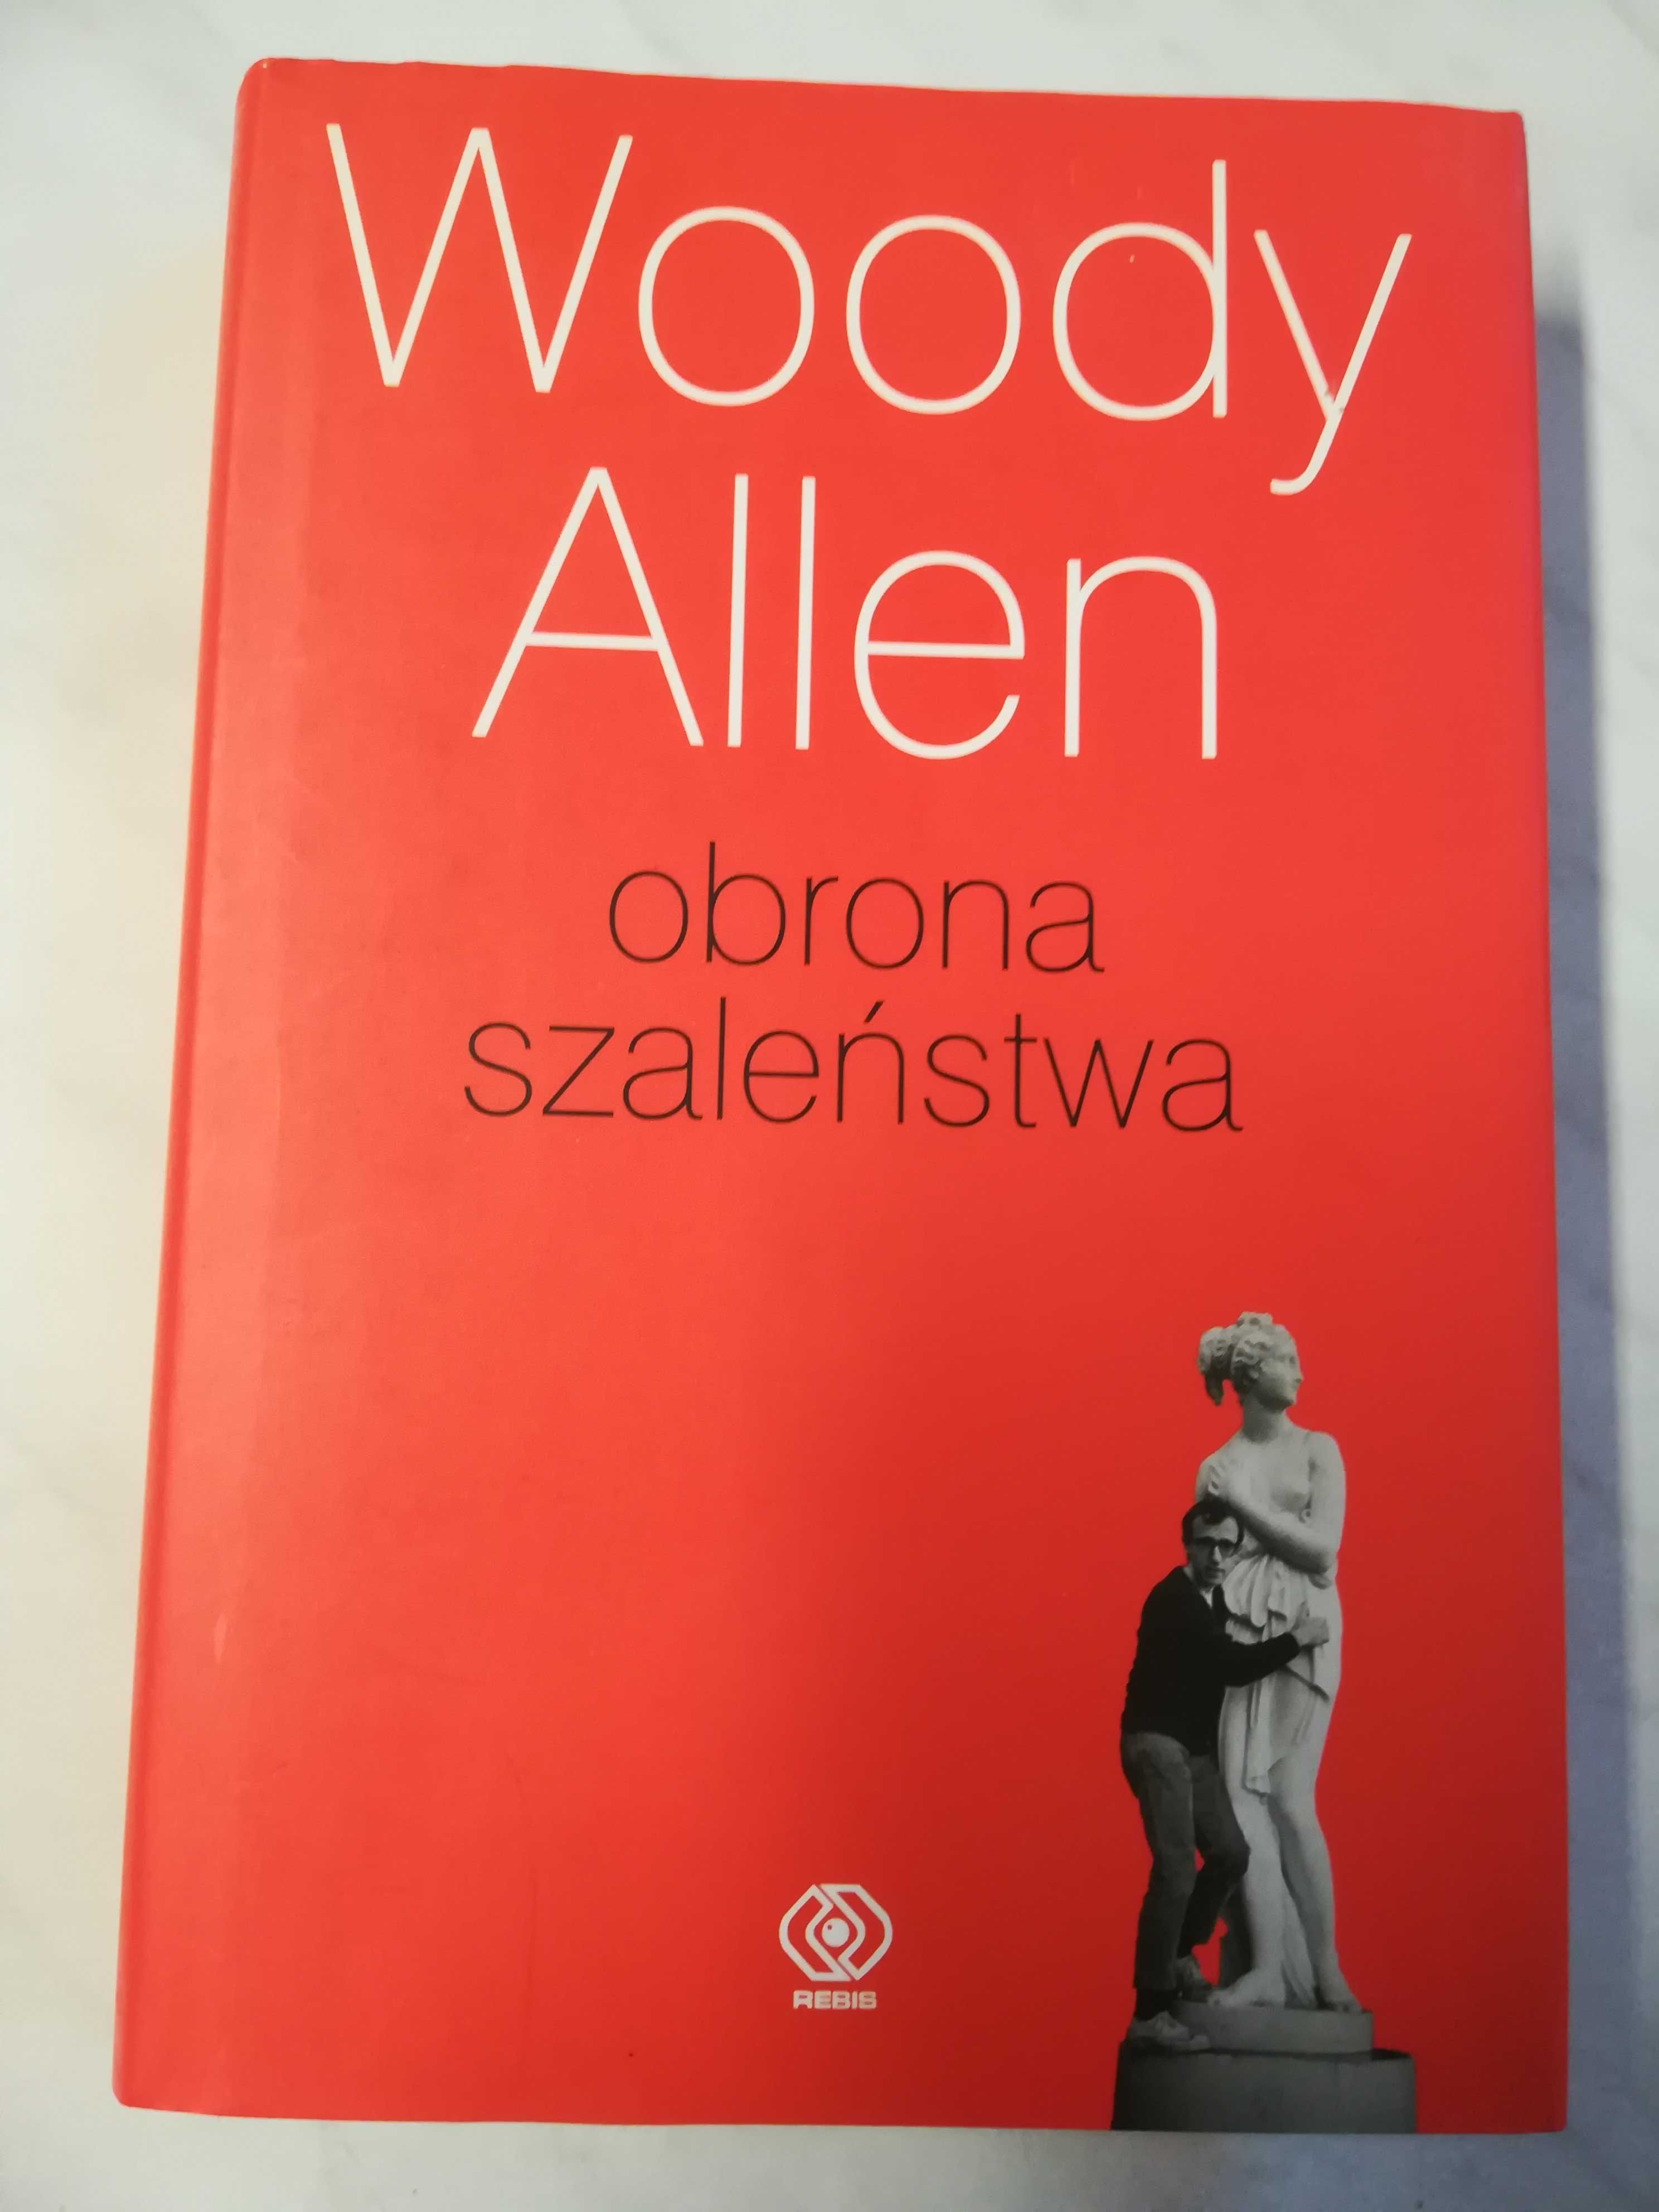 Obrona szaleństwa Woody Allen